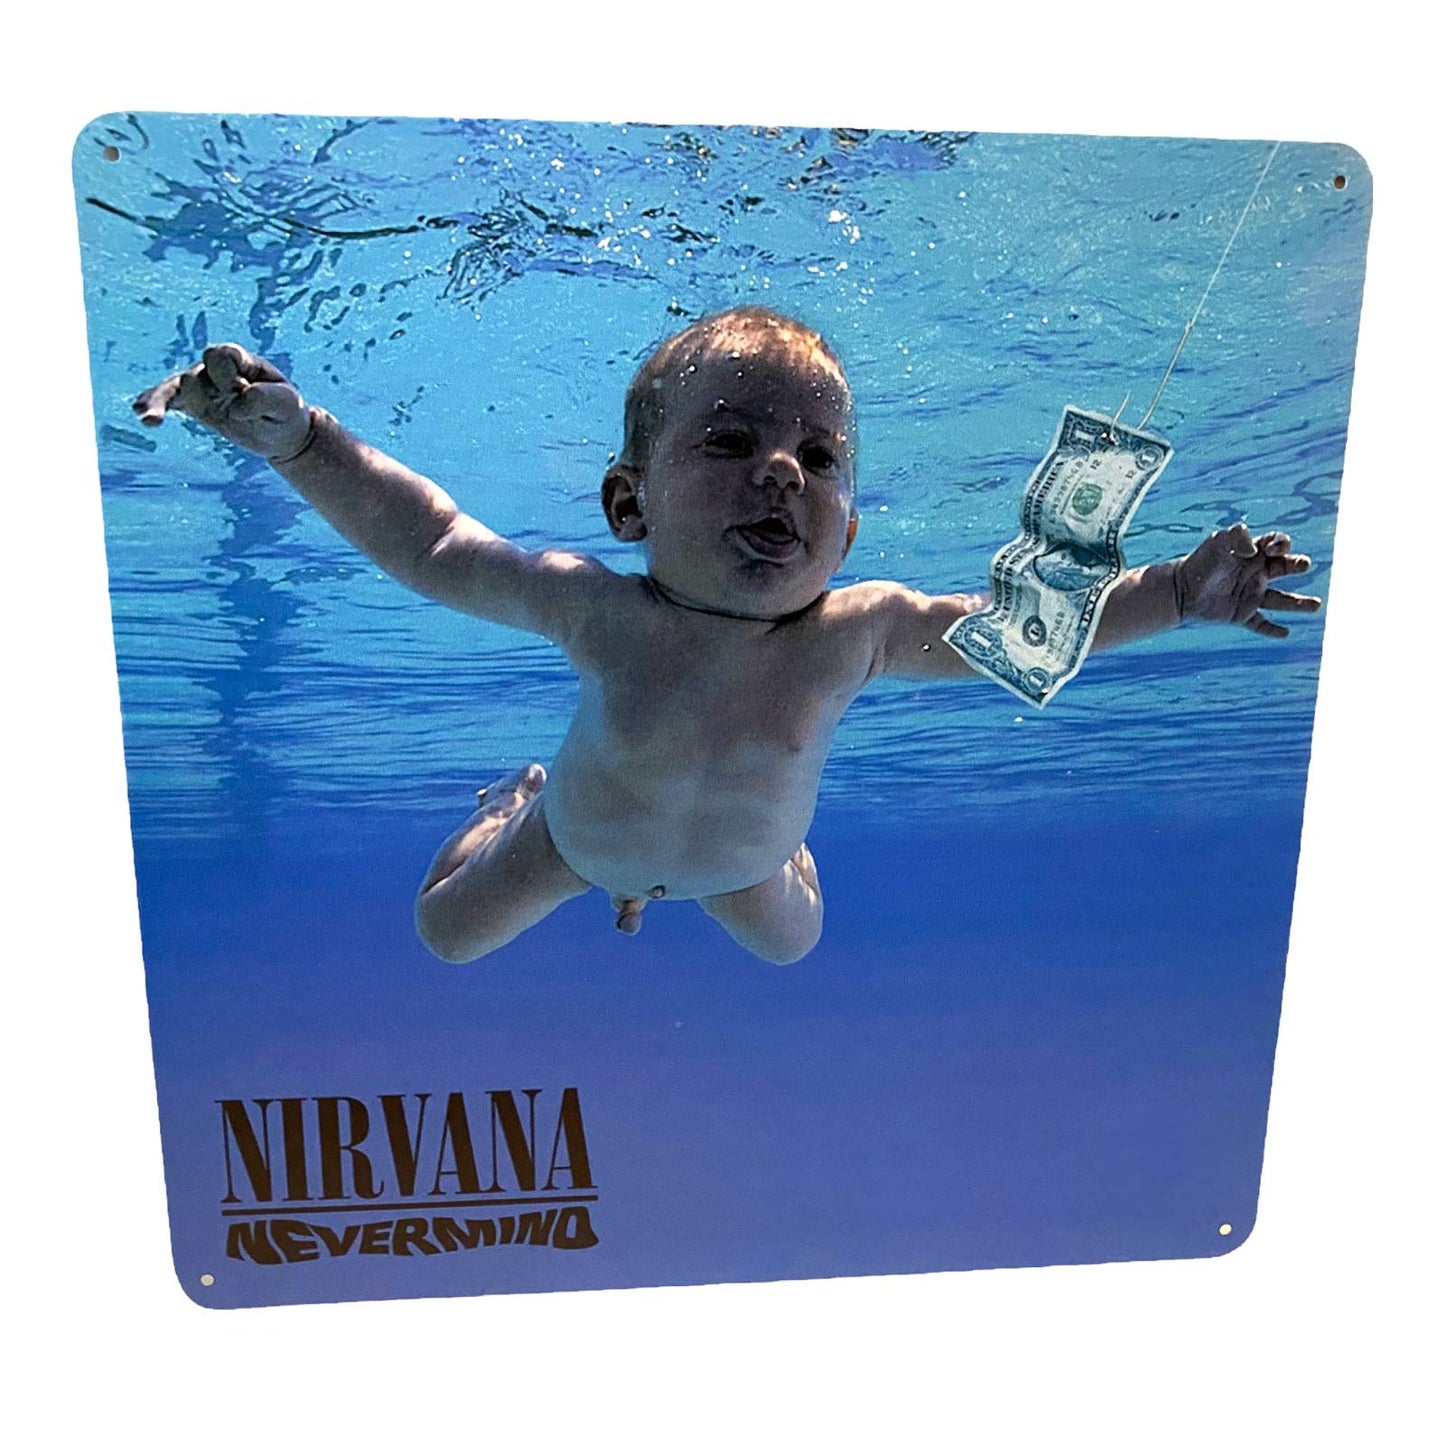 Nirvana - Nevermind Album Cover Metal Print Tin Sign 12"x 12"